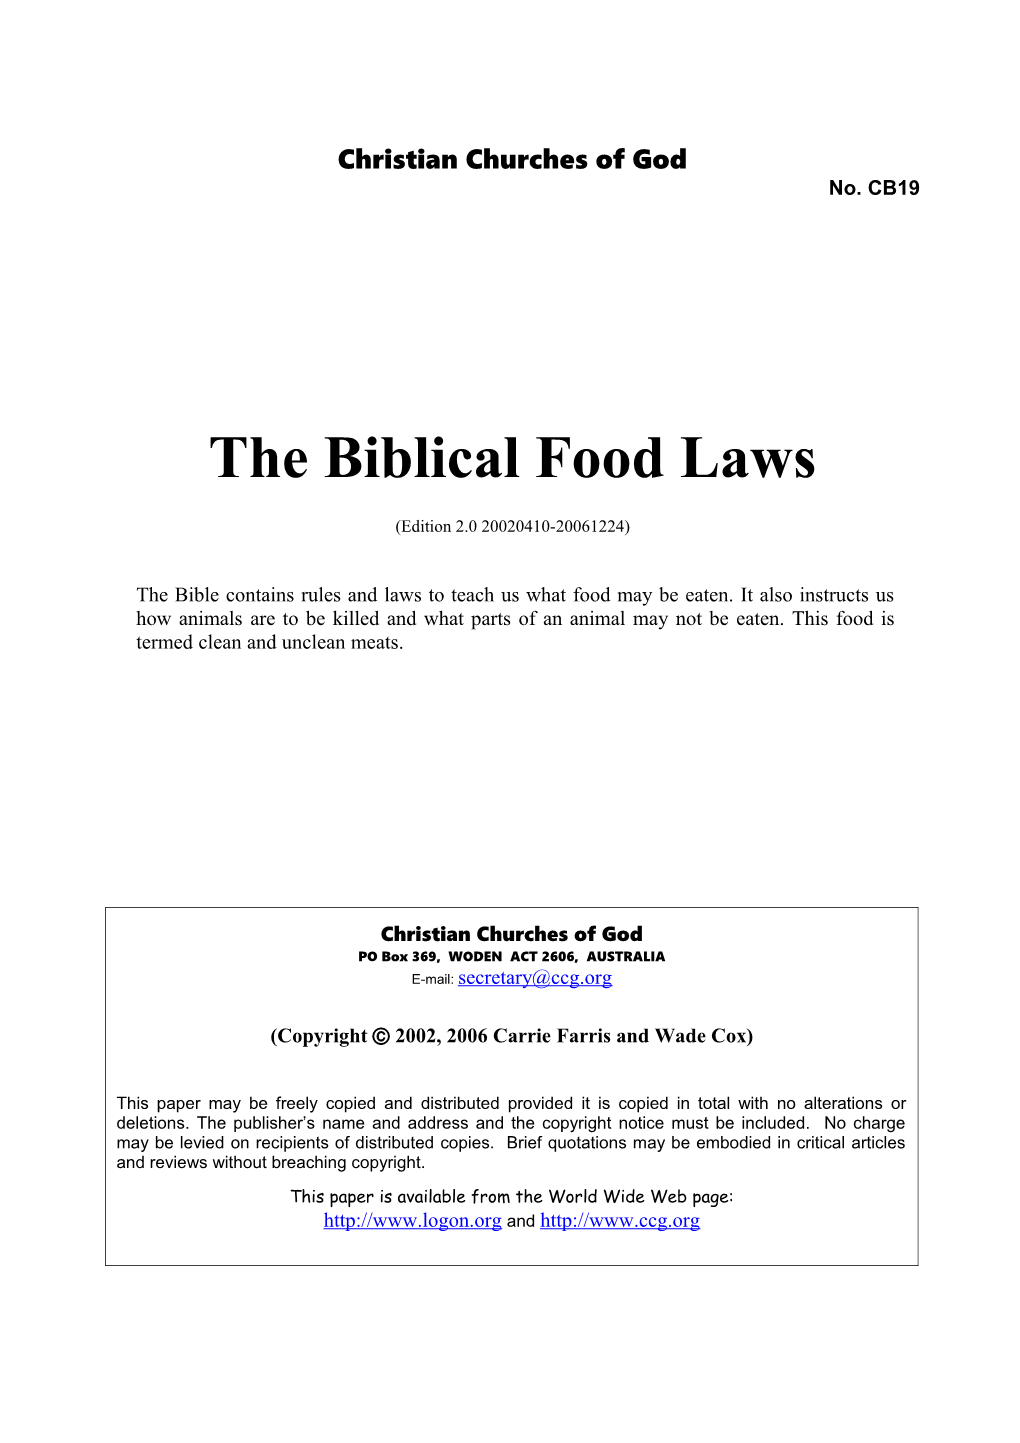 The Biblical Food Laws (No. CB19)